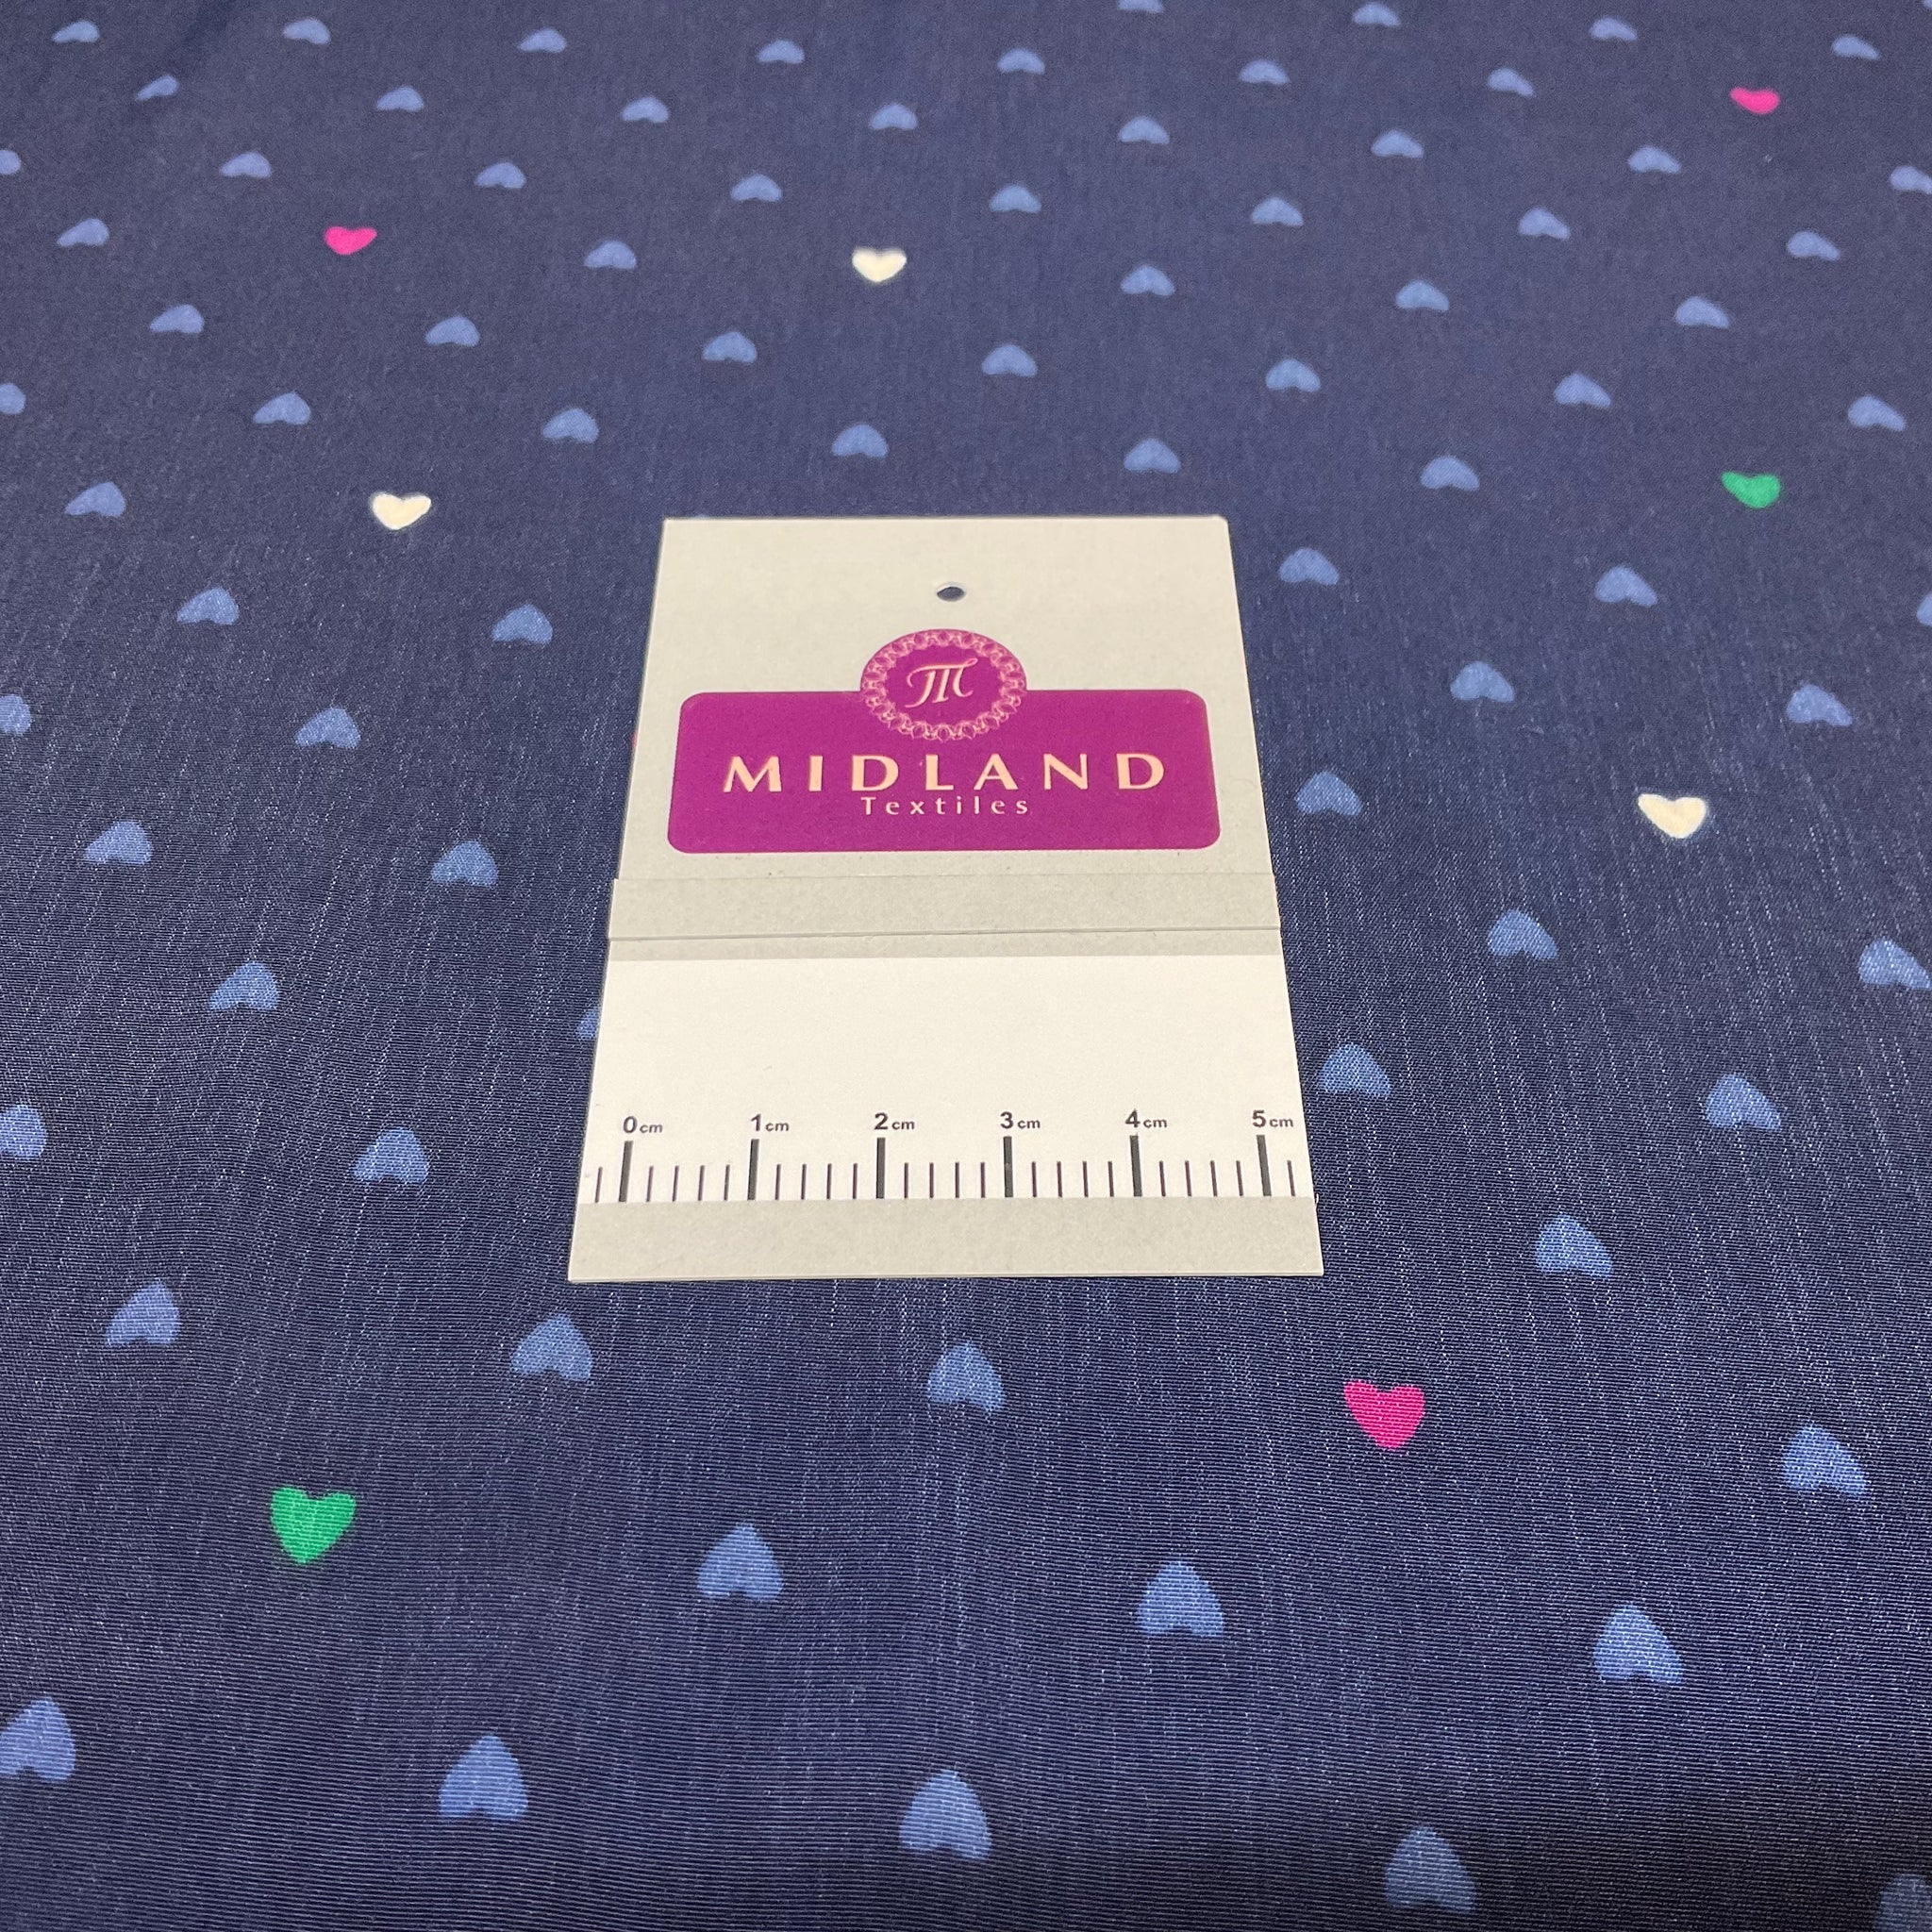 Navy Peach-skin Crepe Small Hearts Polka dot spot Printed Dress fabric 140cm width M1400-39